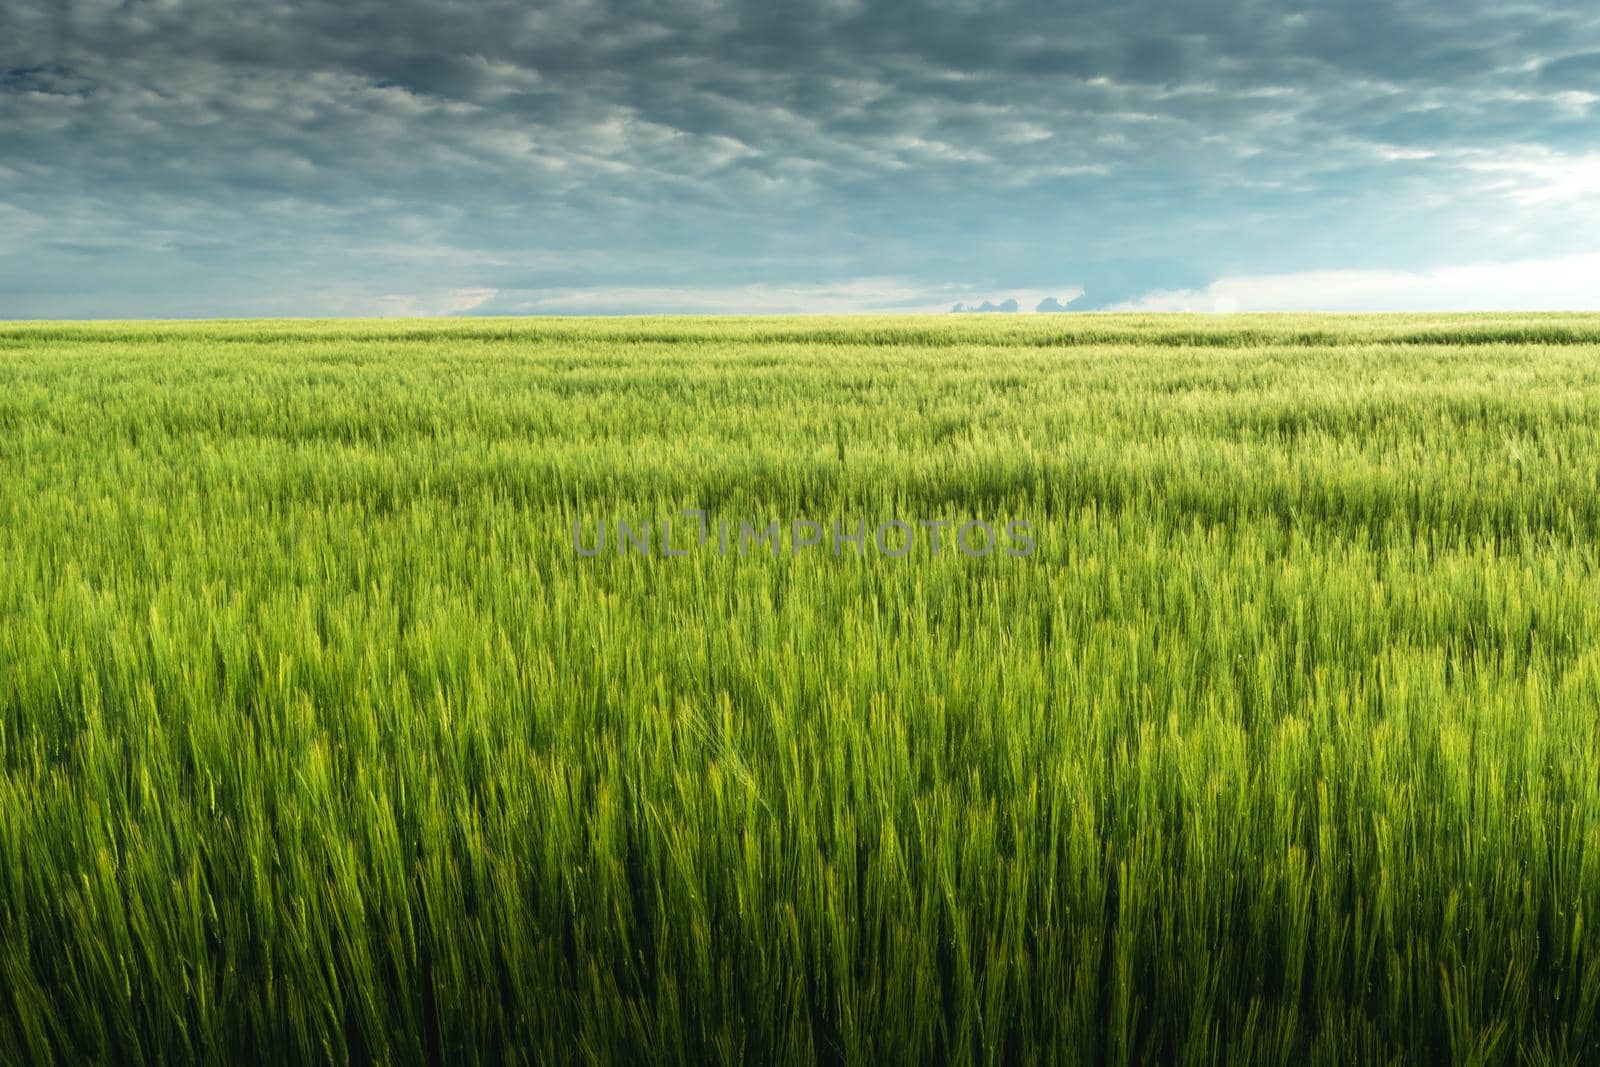 Green barley field and cloudy gray sky by darekb22